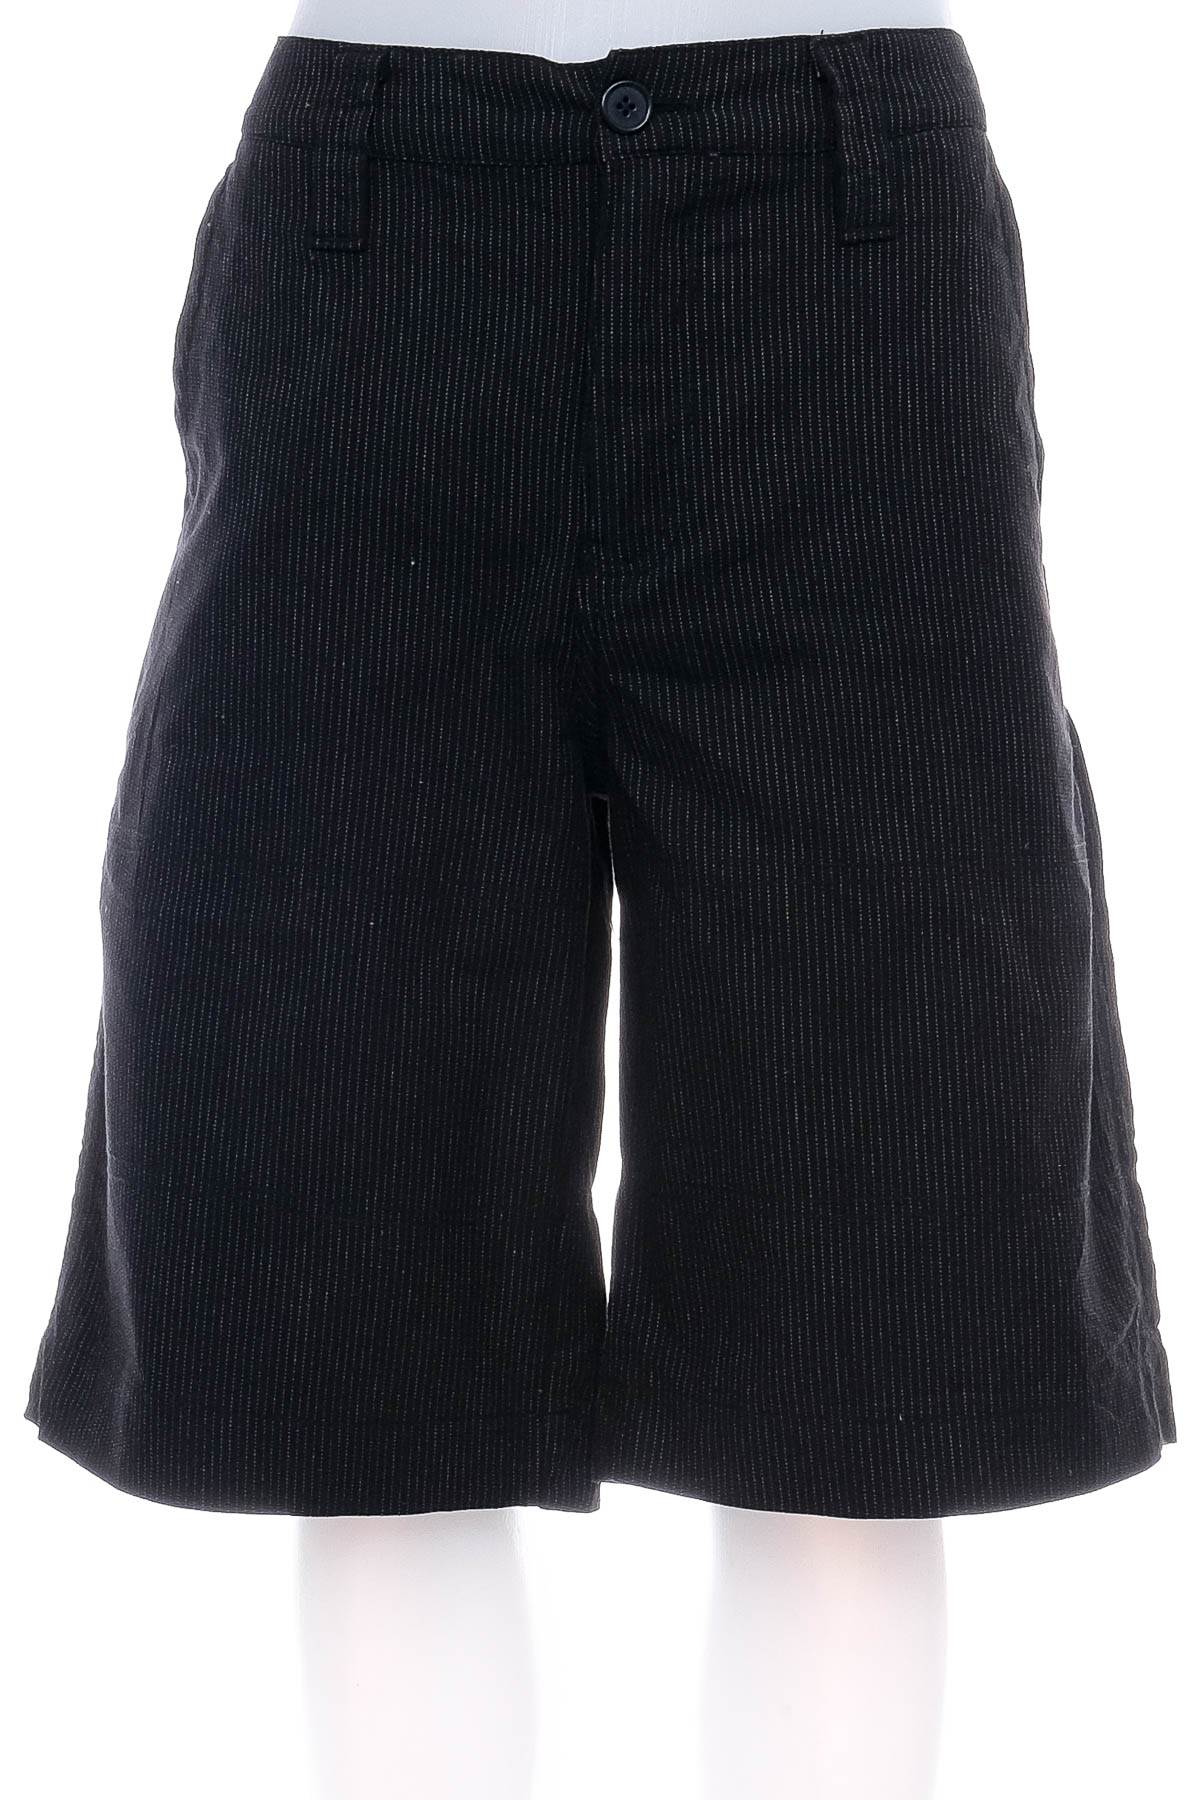 Men's shorts - GUESS - 0